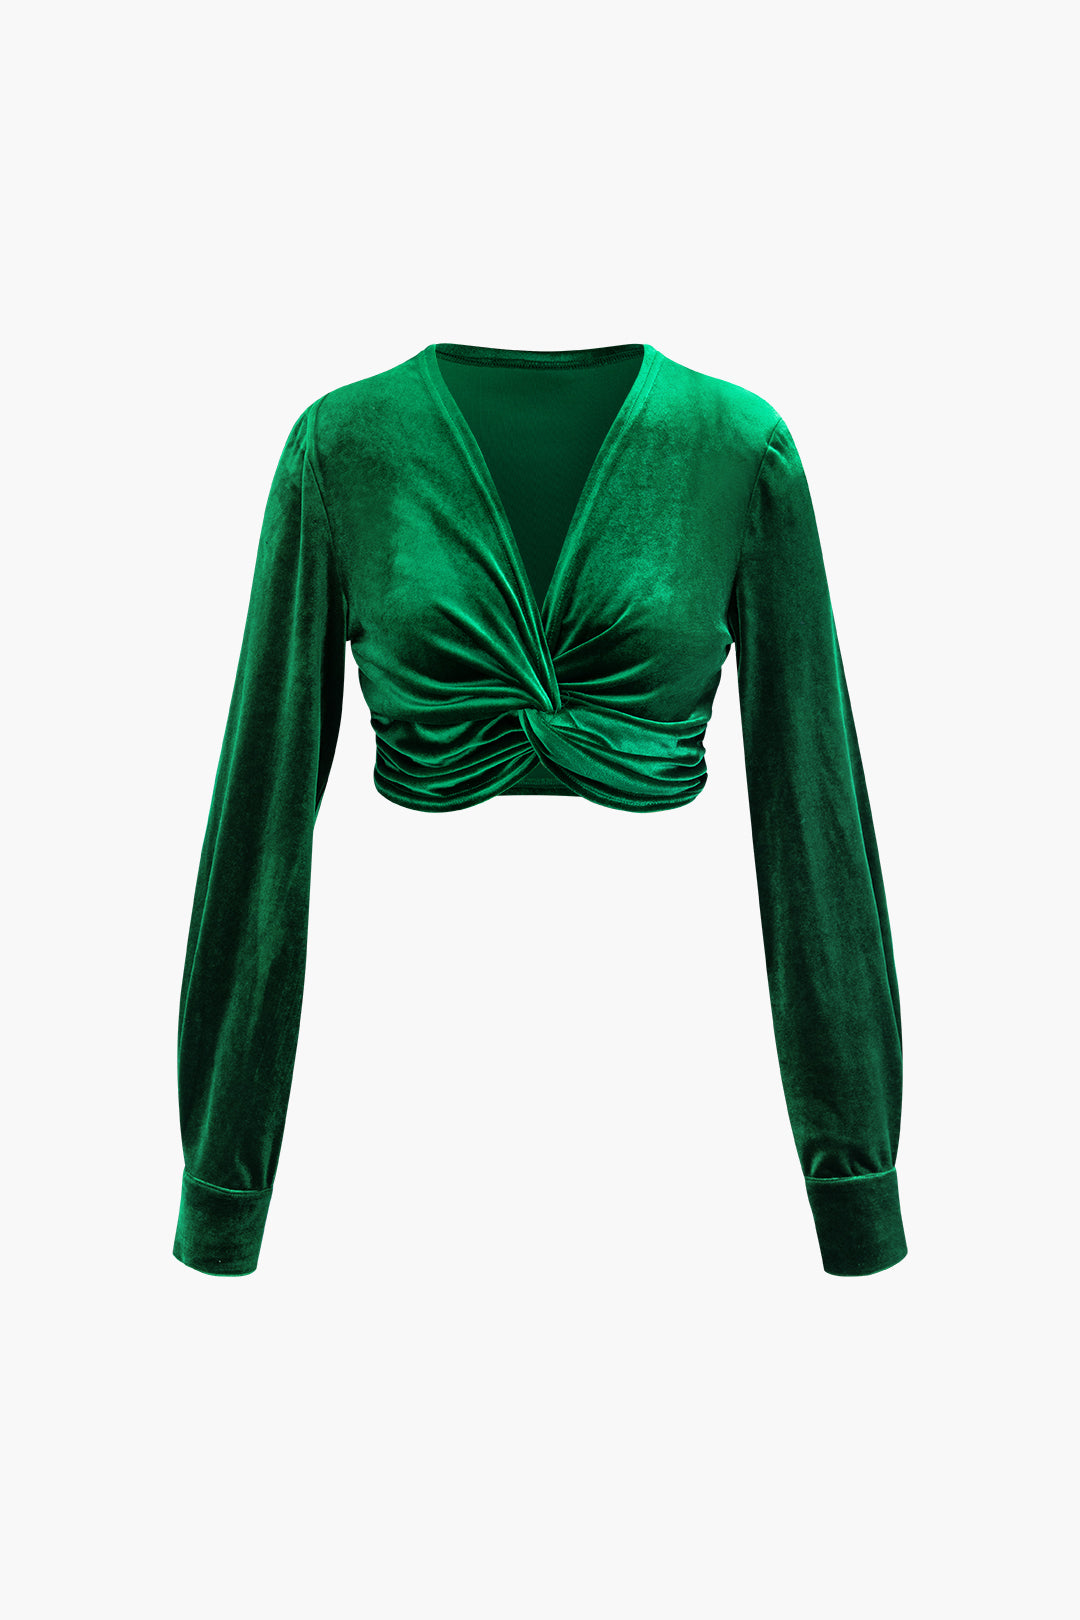 Emerald Green Top - Crushed Velvet Crop Top - Long Sleeve Top - Lulus